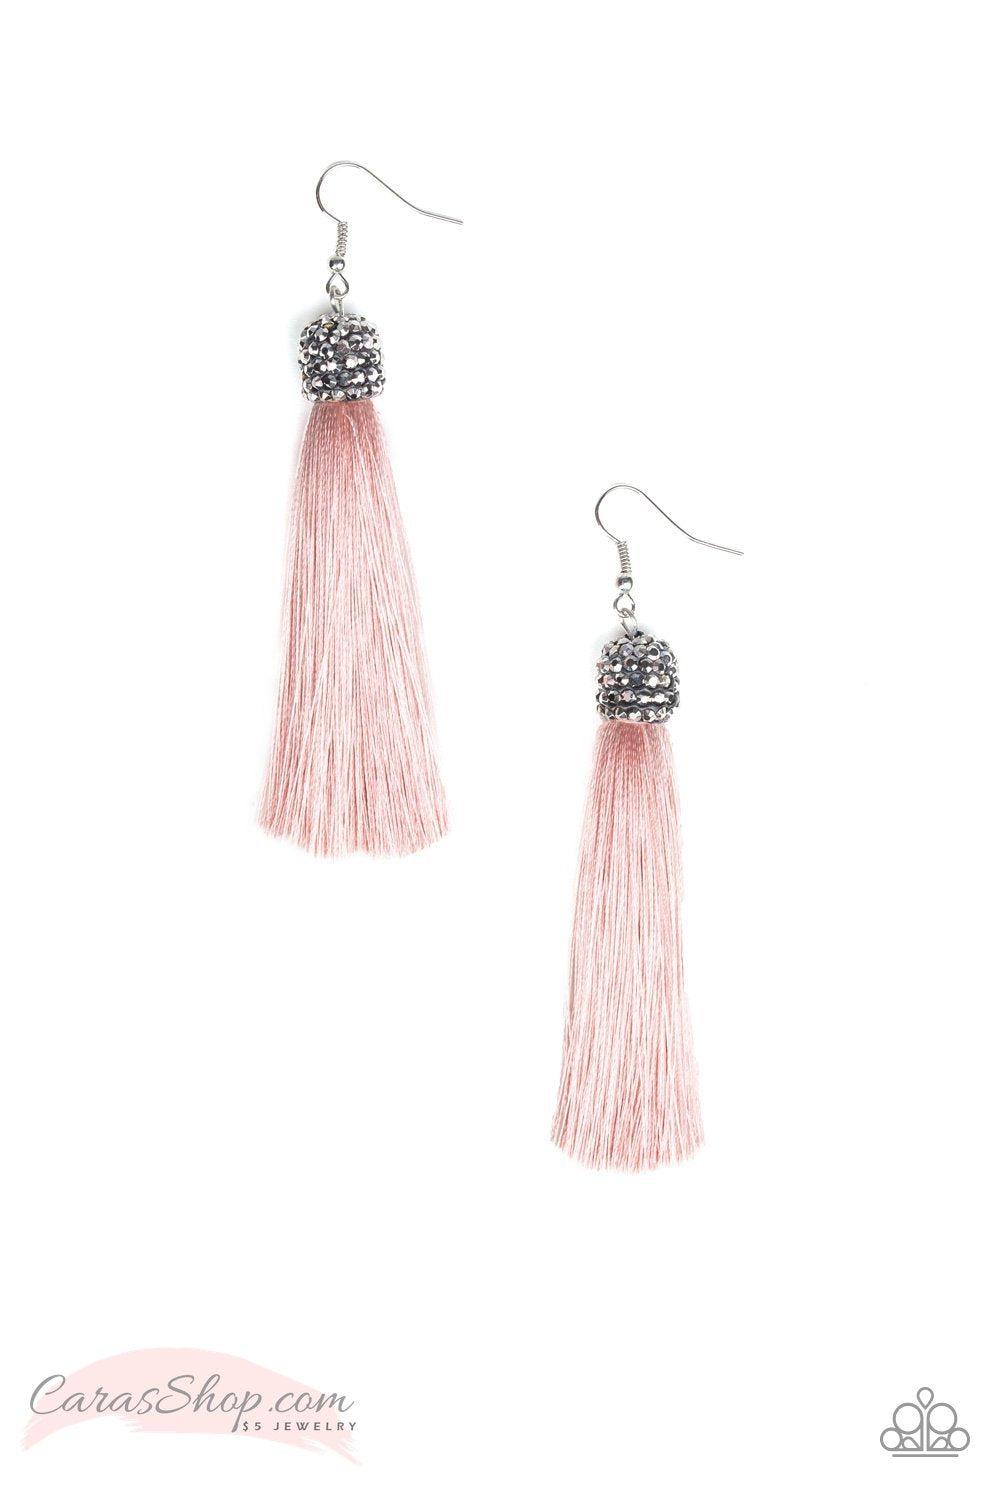 Buy Art Sundari SilverPlated Alloy Chandwali Light Pink Soft Tassel Thread  Earrings for Women  Girls Fashion  Traditional Earrings  Earrings set   Accessories Jewellery  Birthday  Anniversary Gift Online